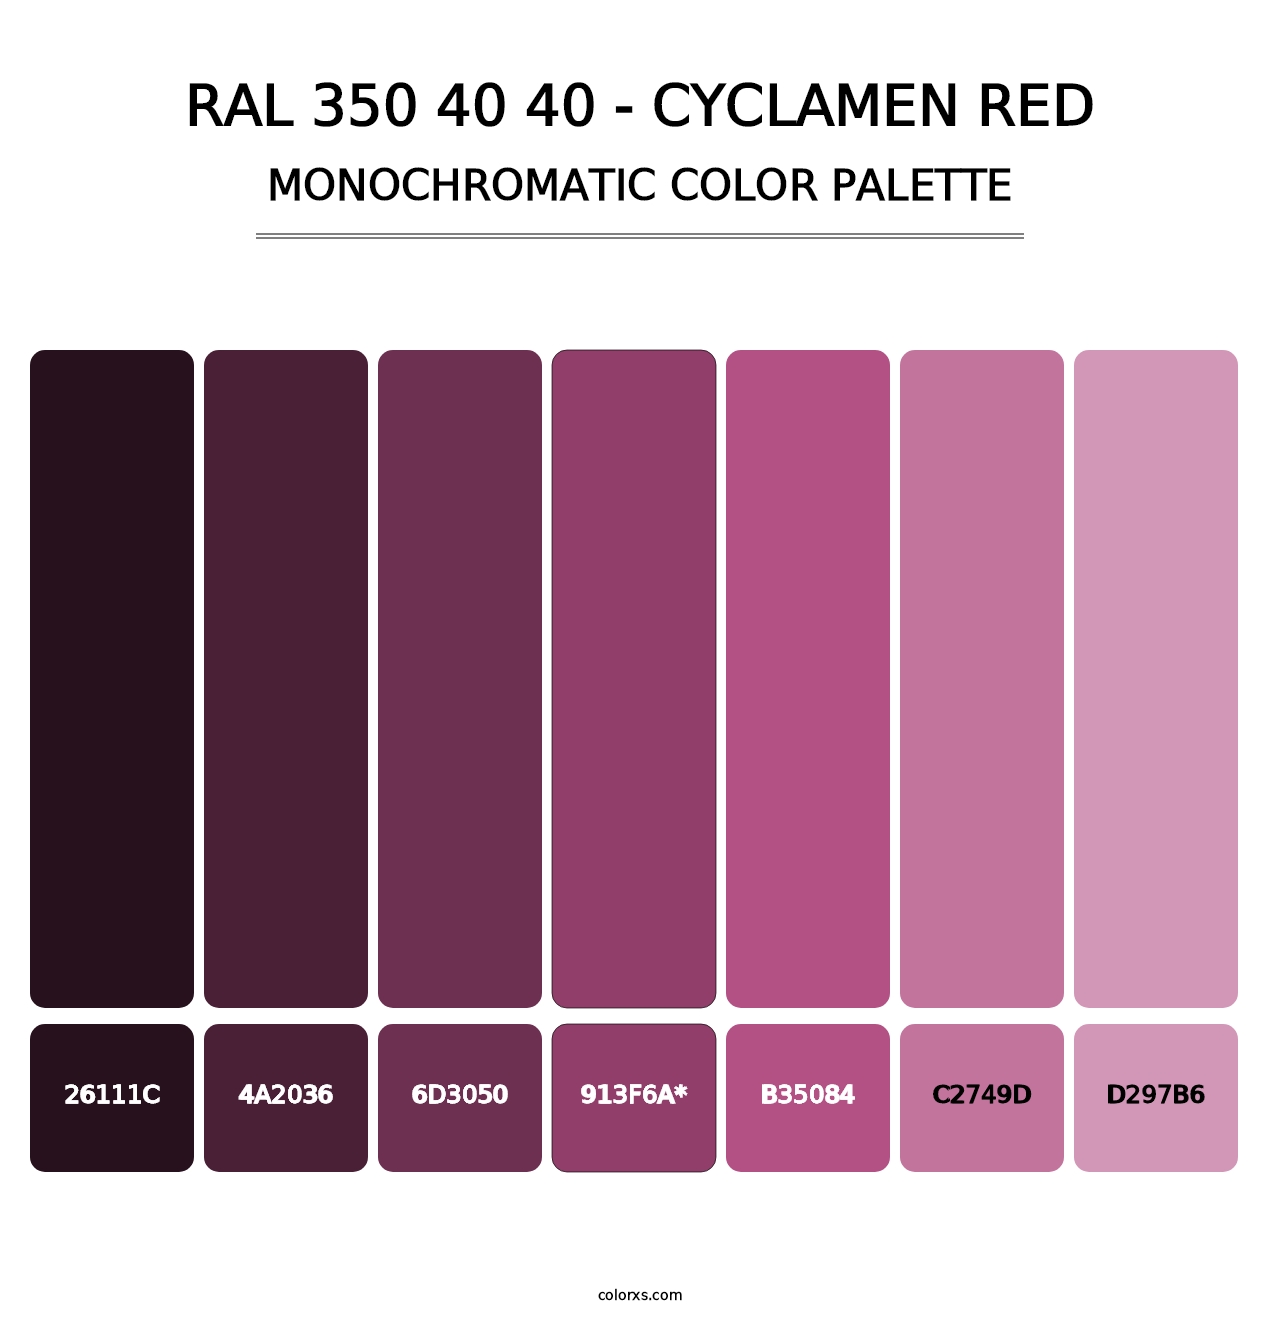 RAL 350 40 40 - Cyclamen Red - Monochromatic Color Palette